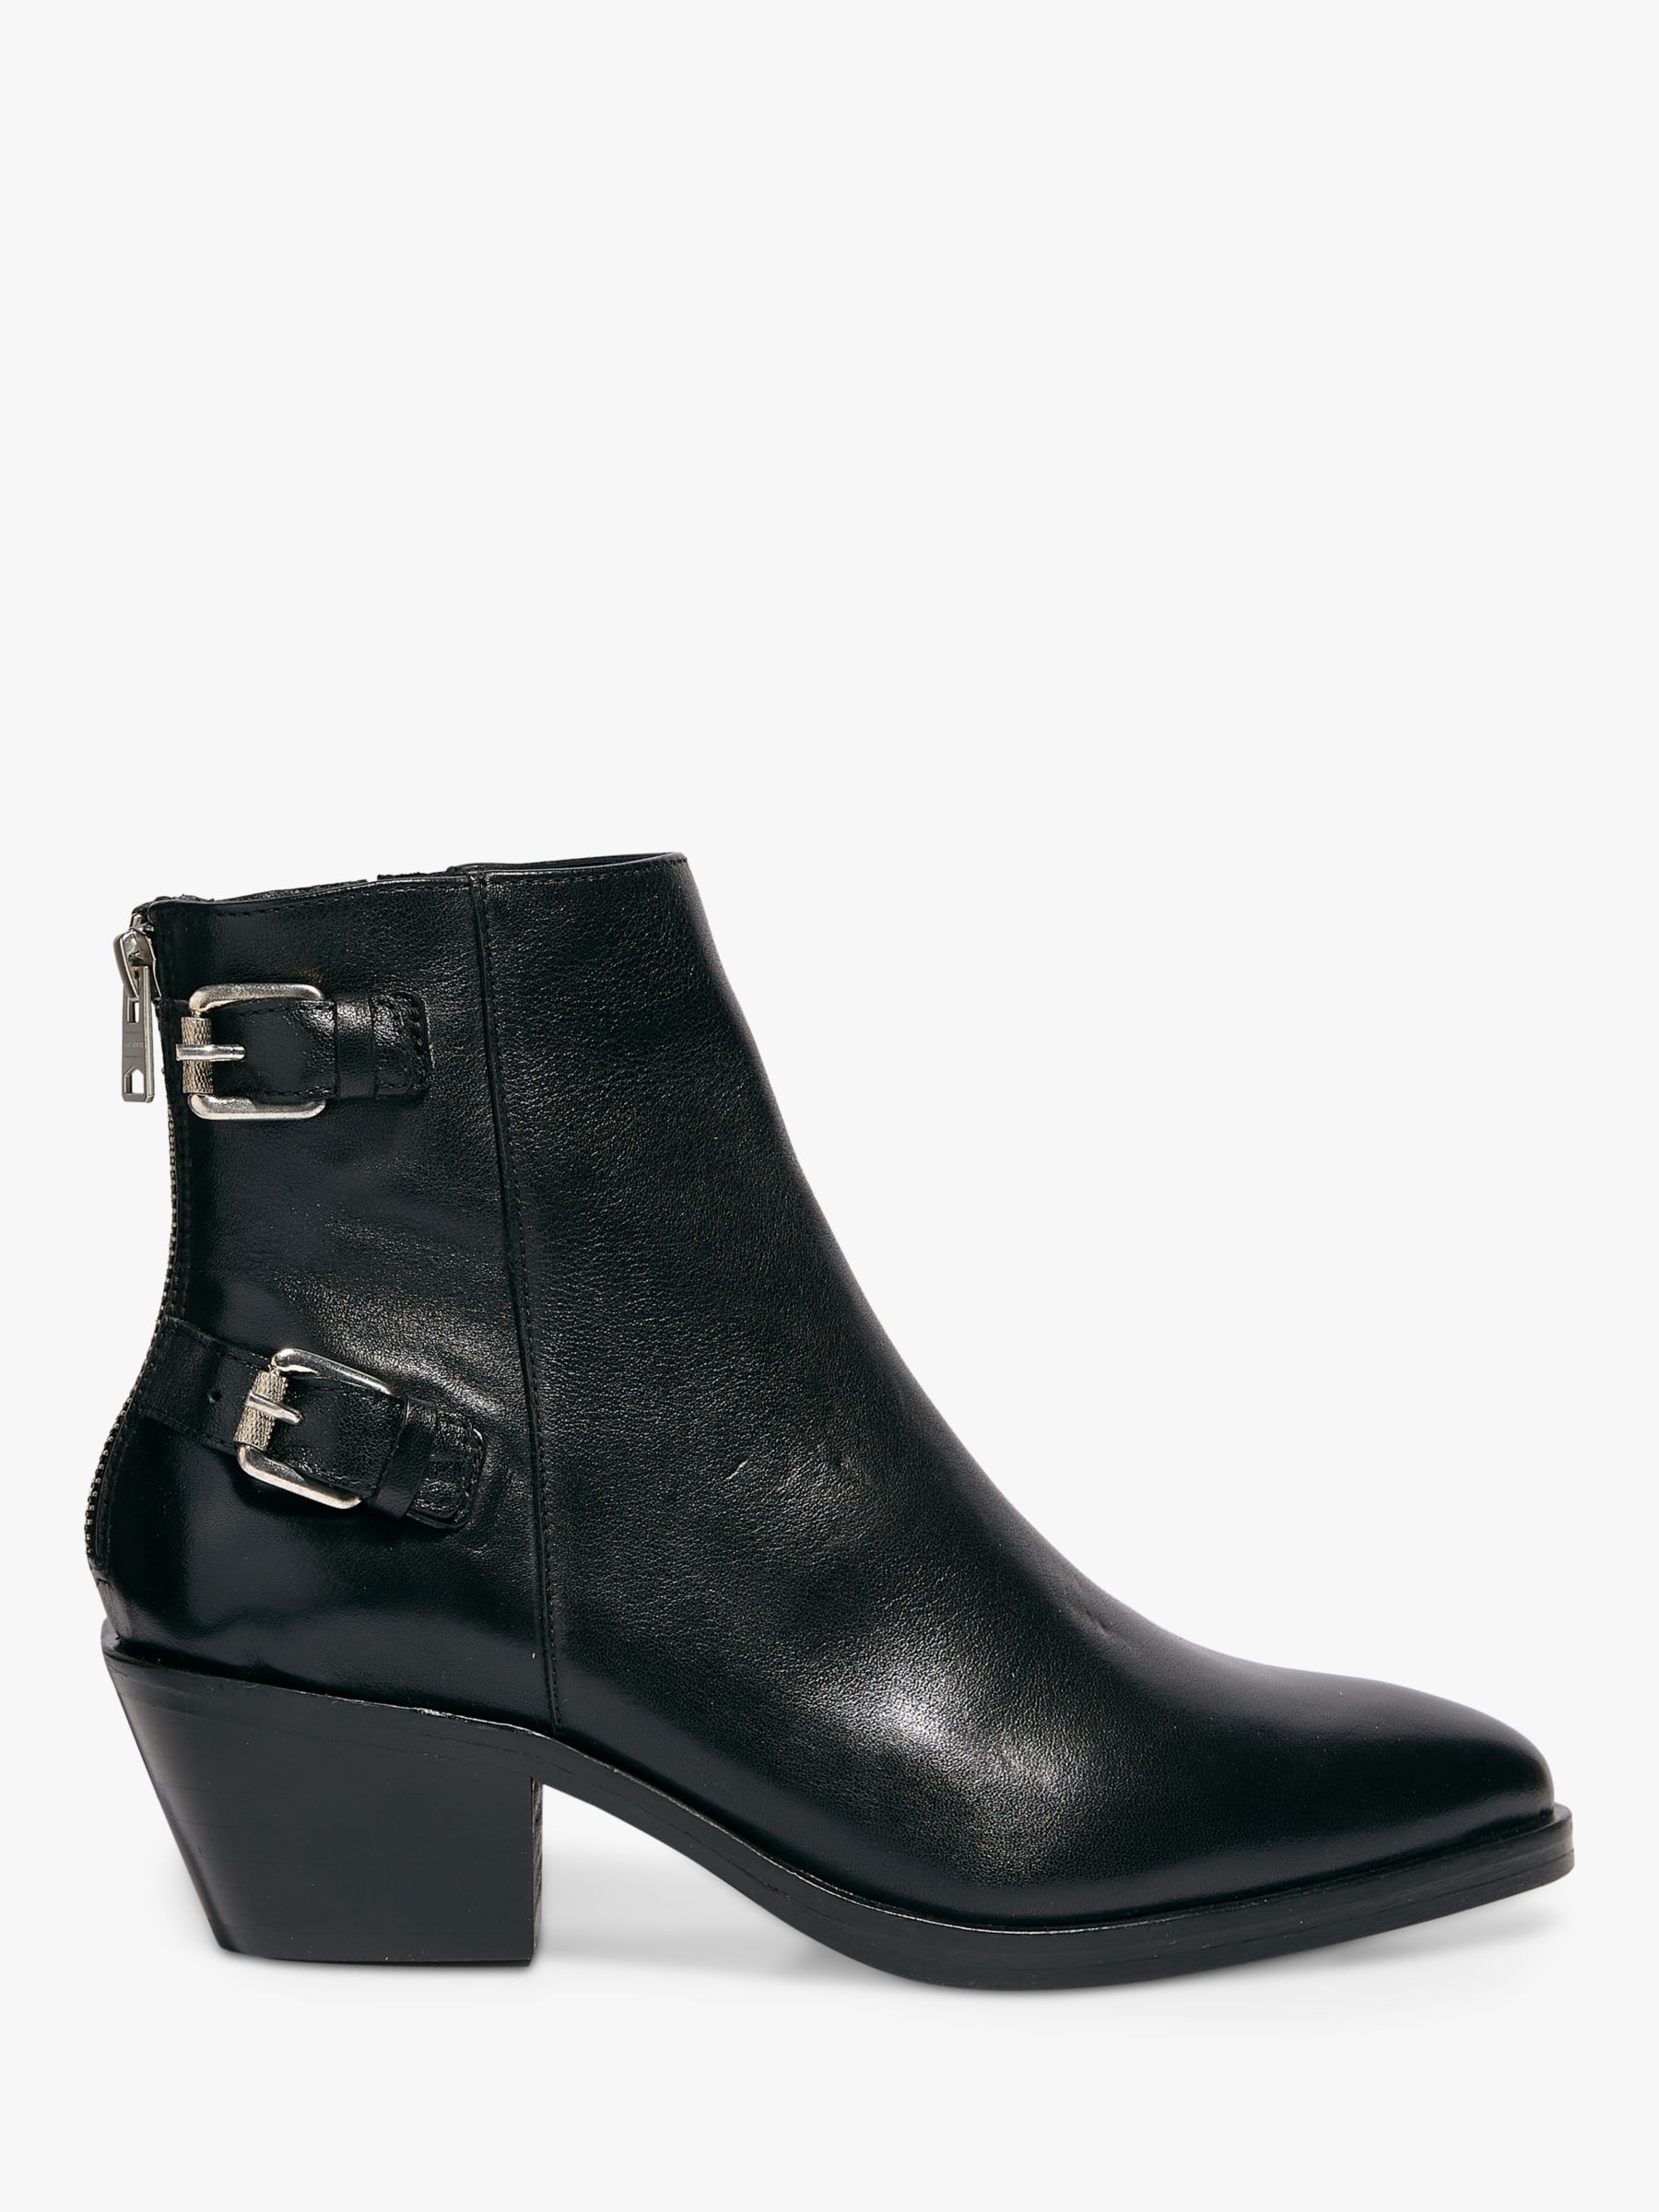 AllSaints Sloan Leather Ankle Boots, Black